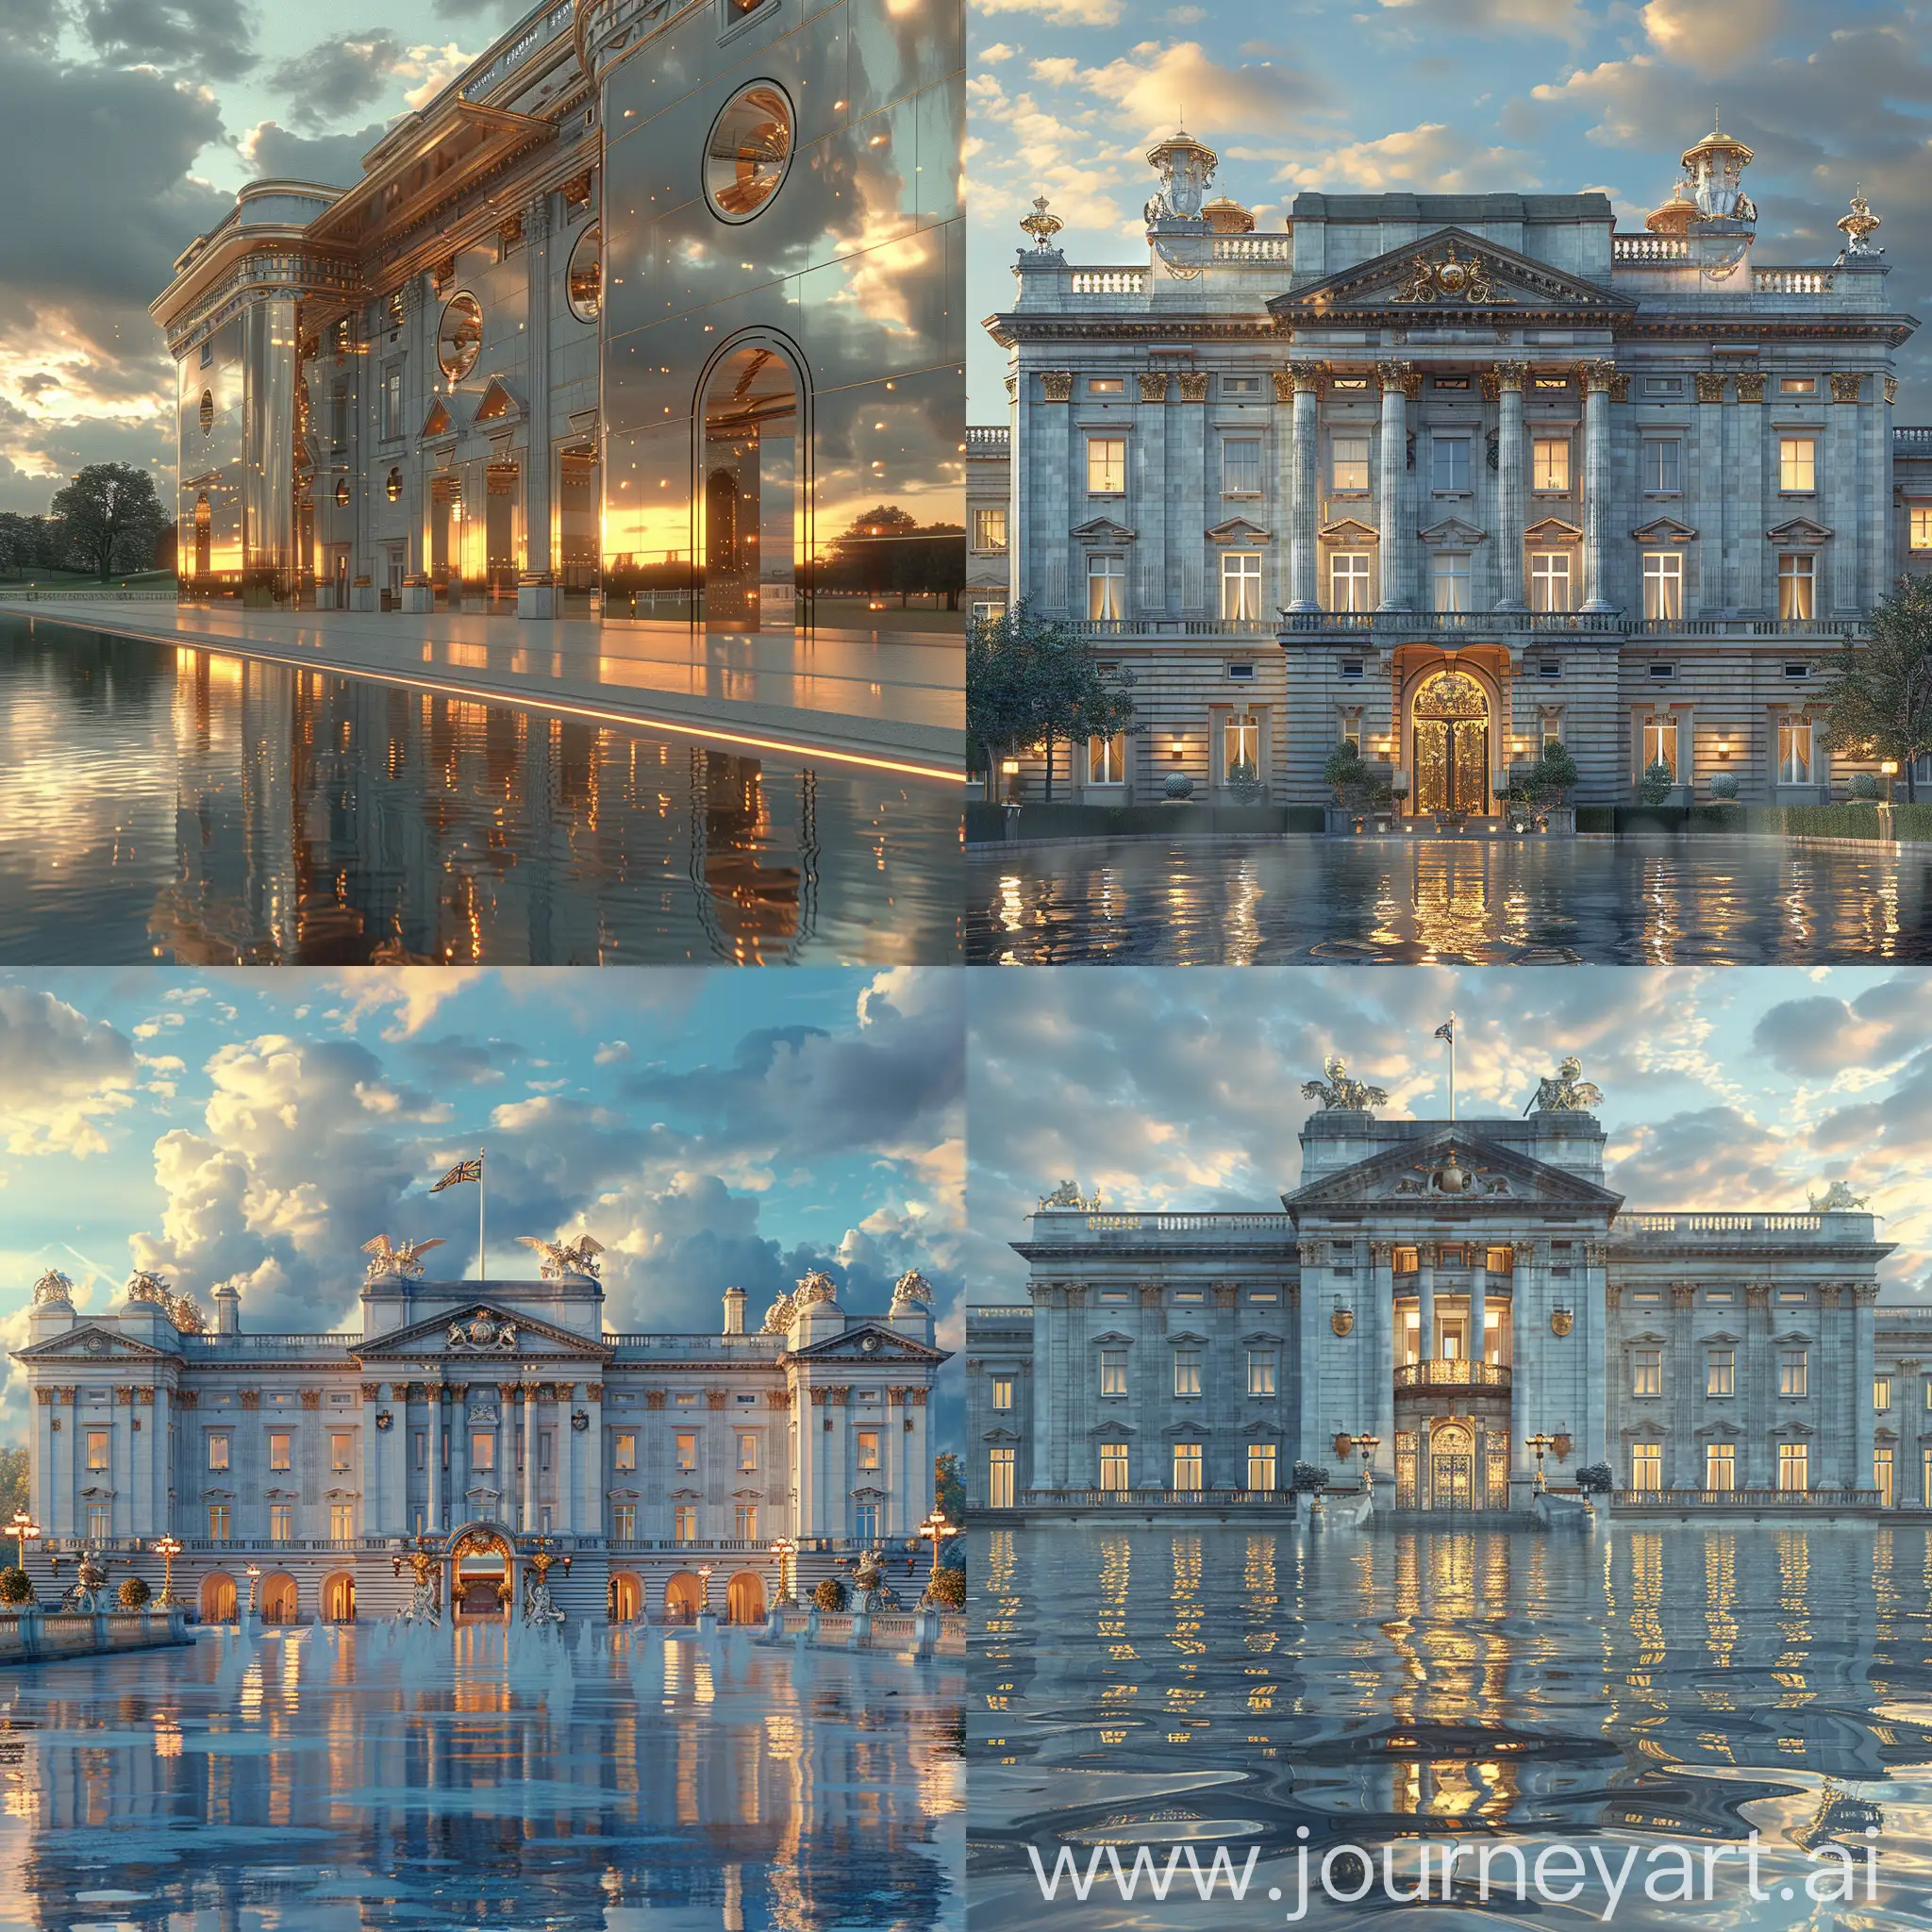 Futuristic-Buckingham-Palace-with-UltraModern-Design-and-Metallic-Elements